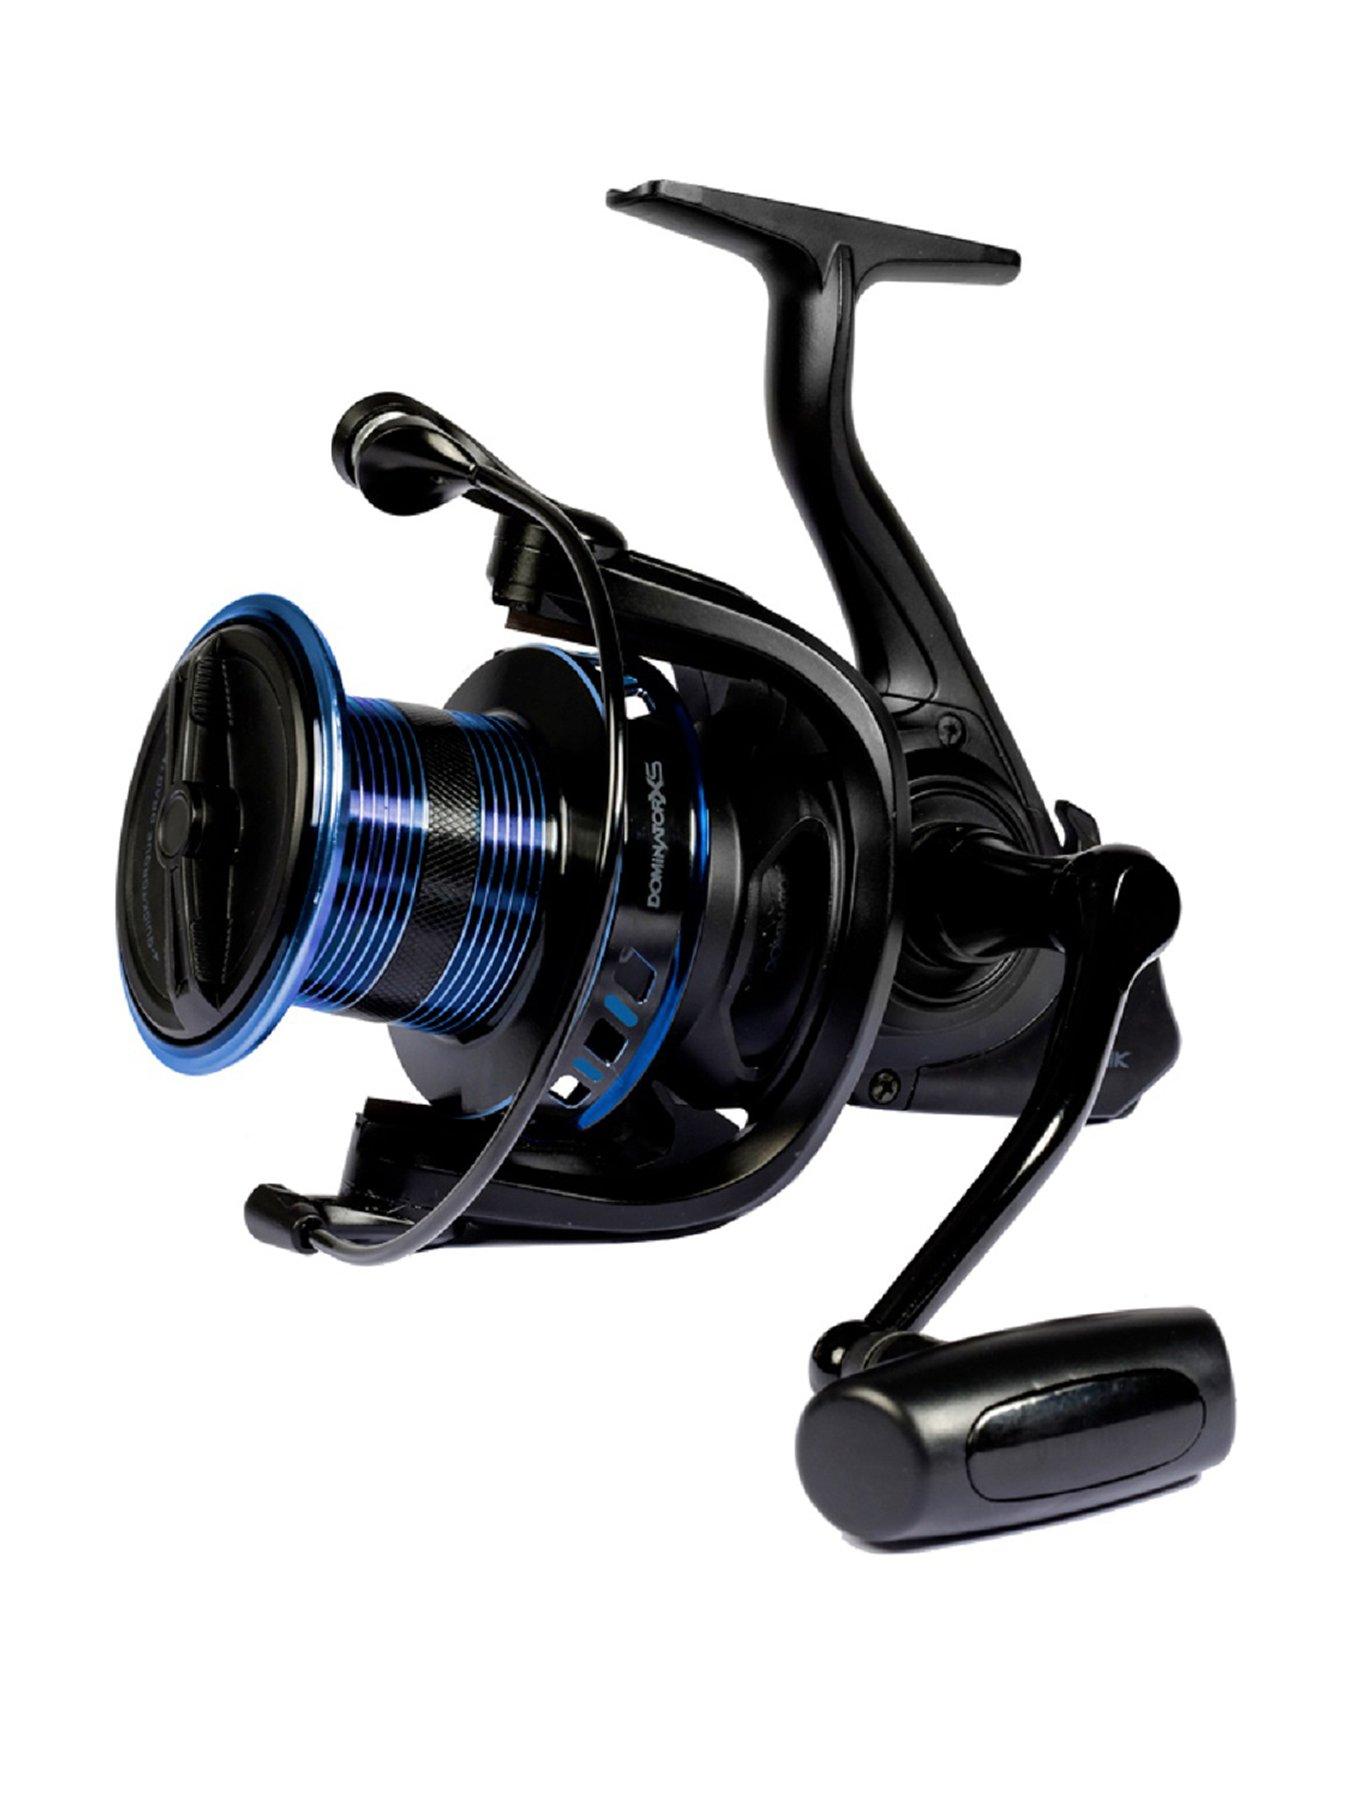 Total Fishing Tackle - The Sonik Vader X 8000 RS carp reel have